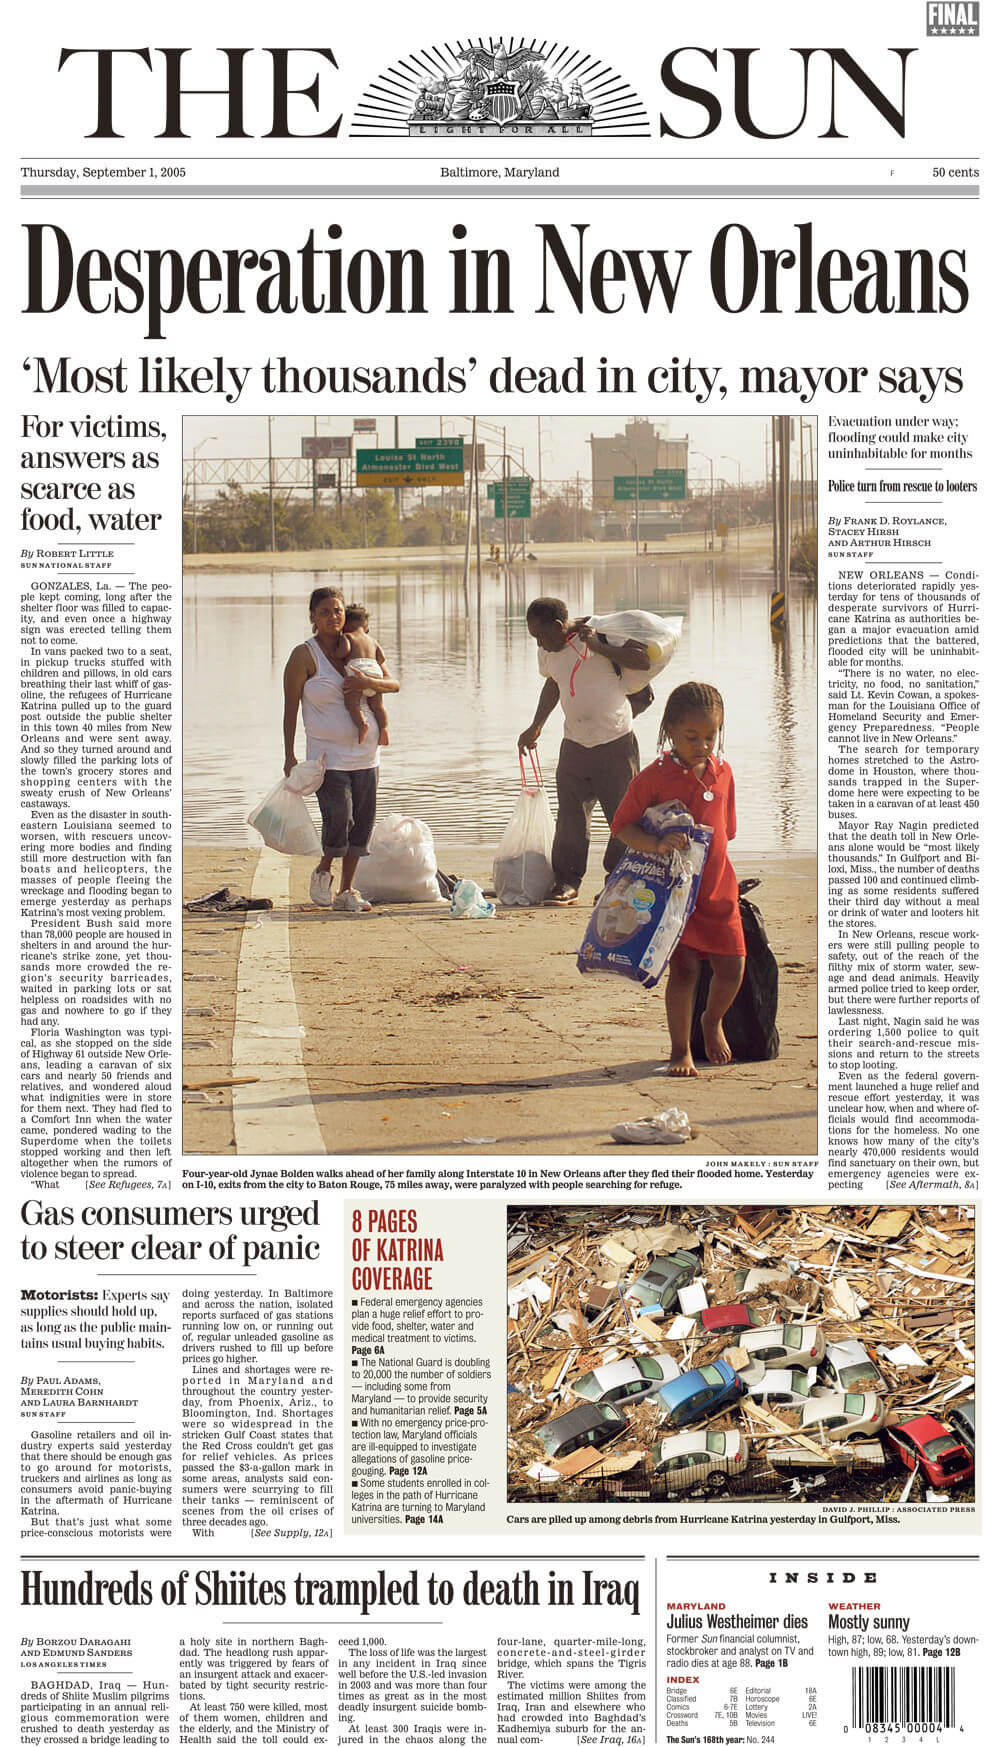 Maryland newspapers 01 Baltimore Baltimore Sun